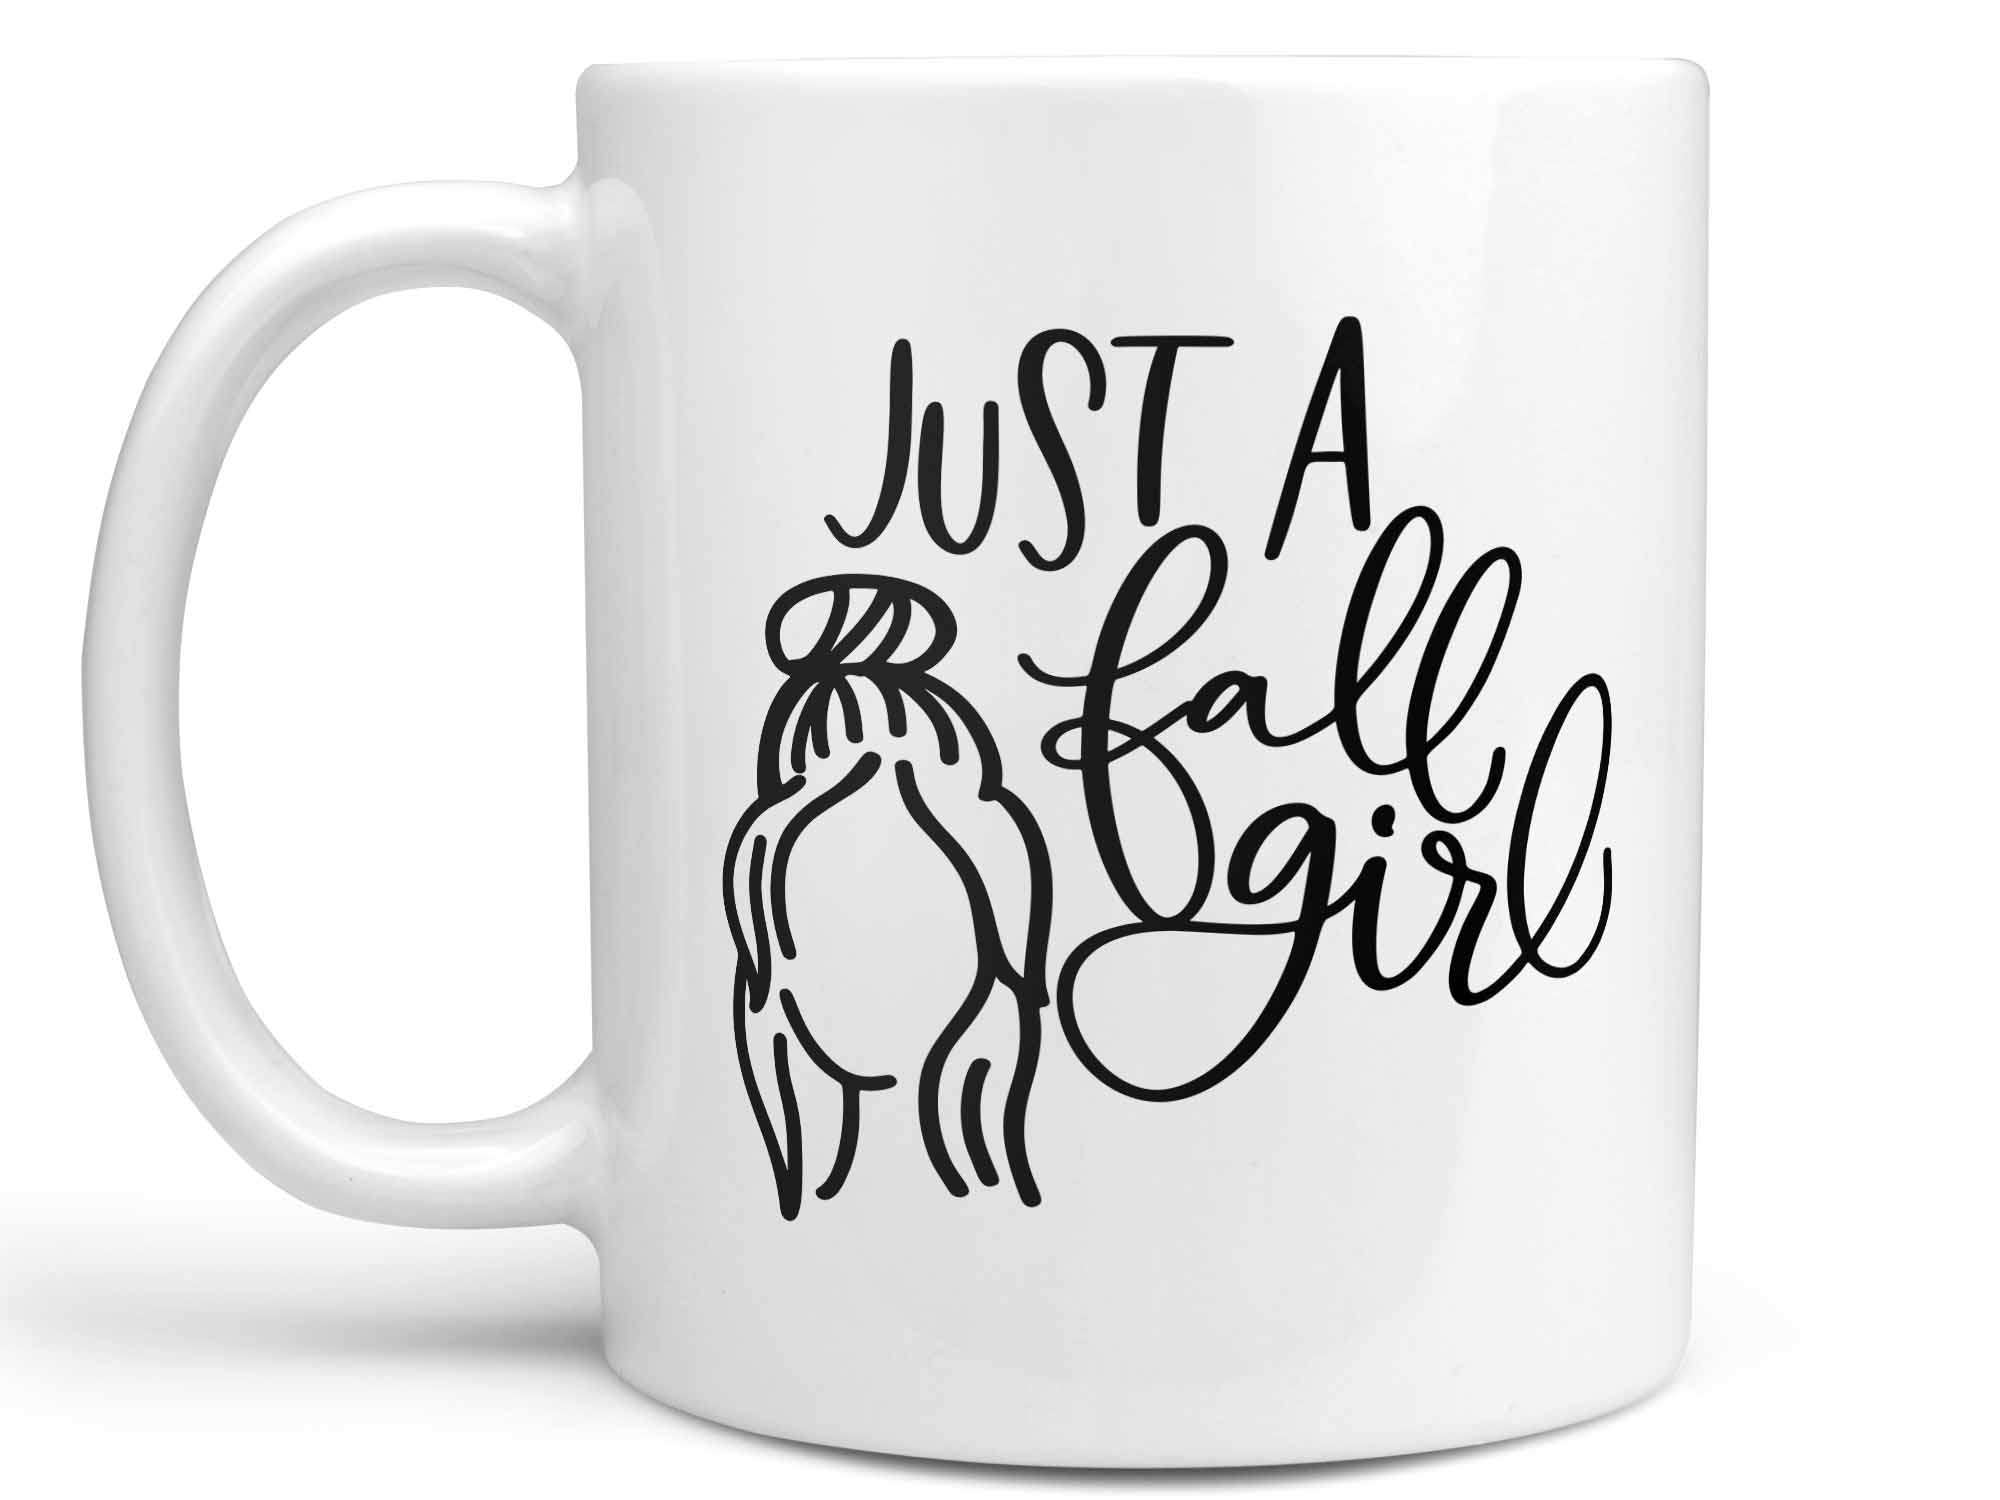 Just a Fall Girl Coffee Mug